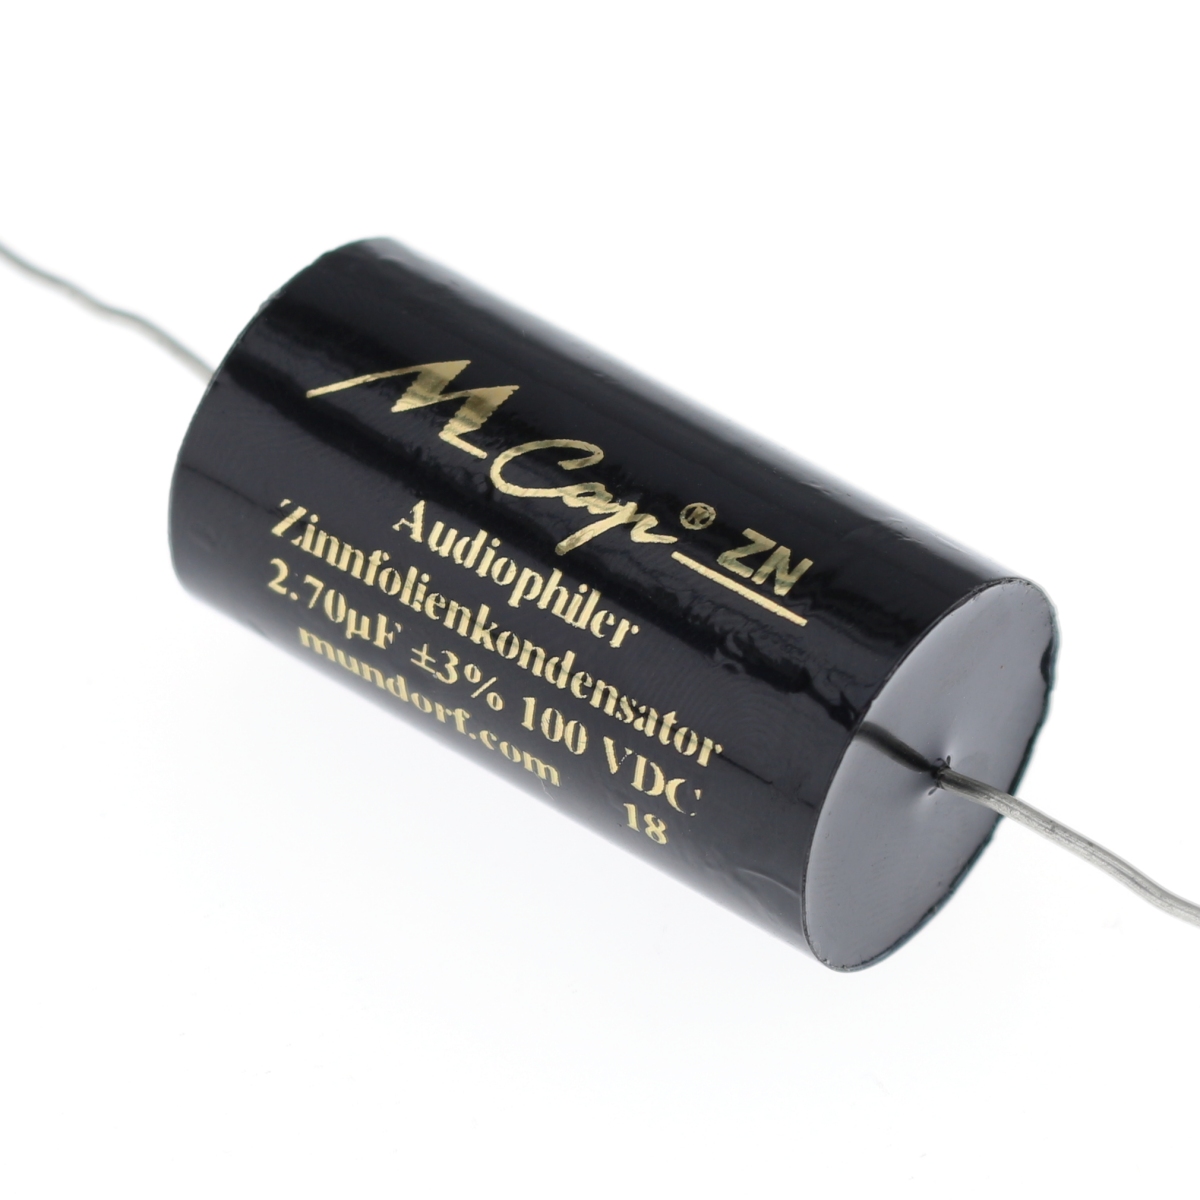 MUNDORF MCAP ZN Condensateur 100V 2.7µF